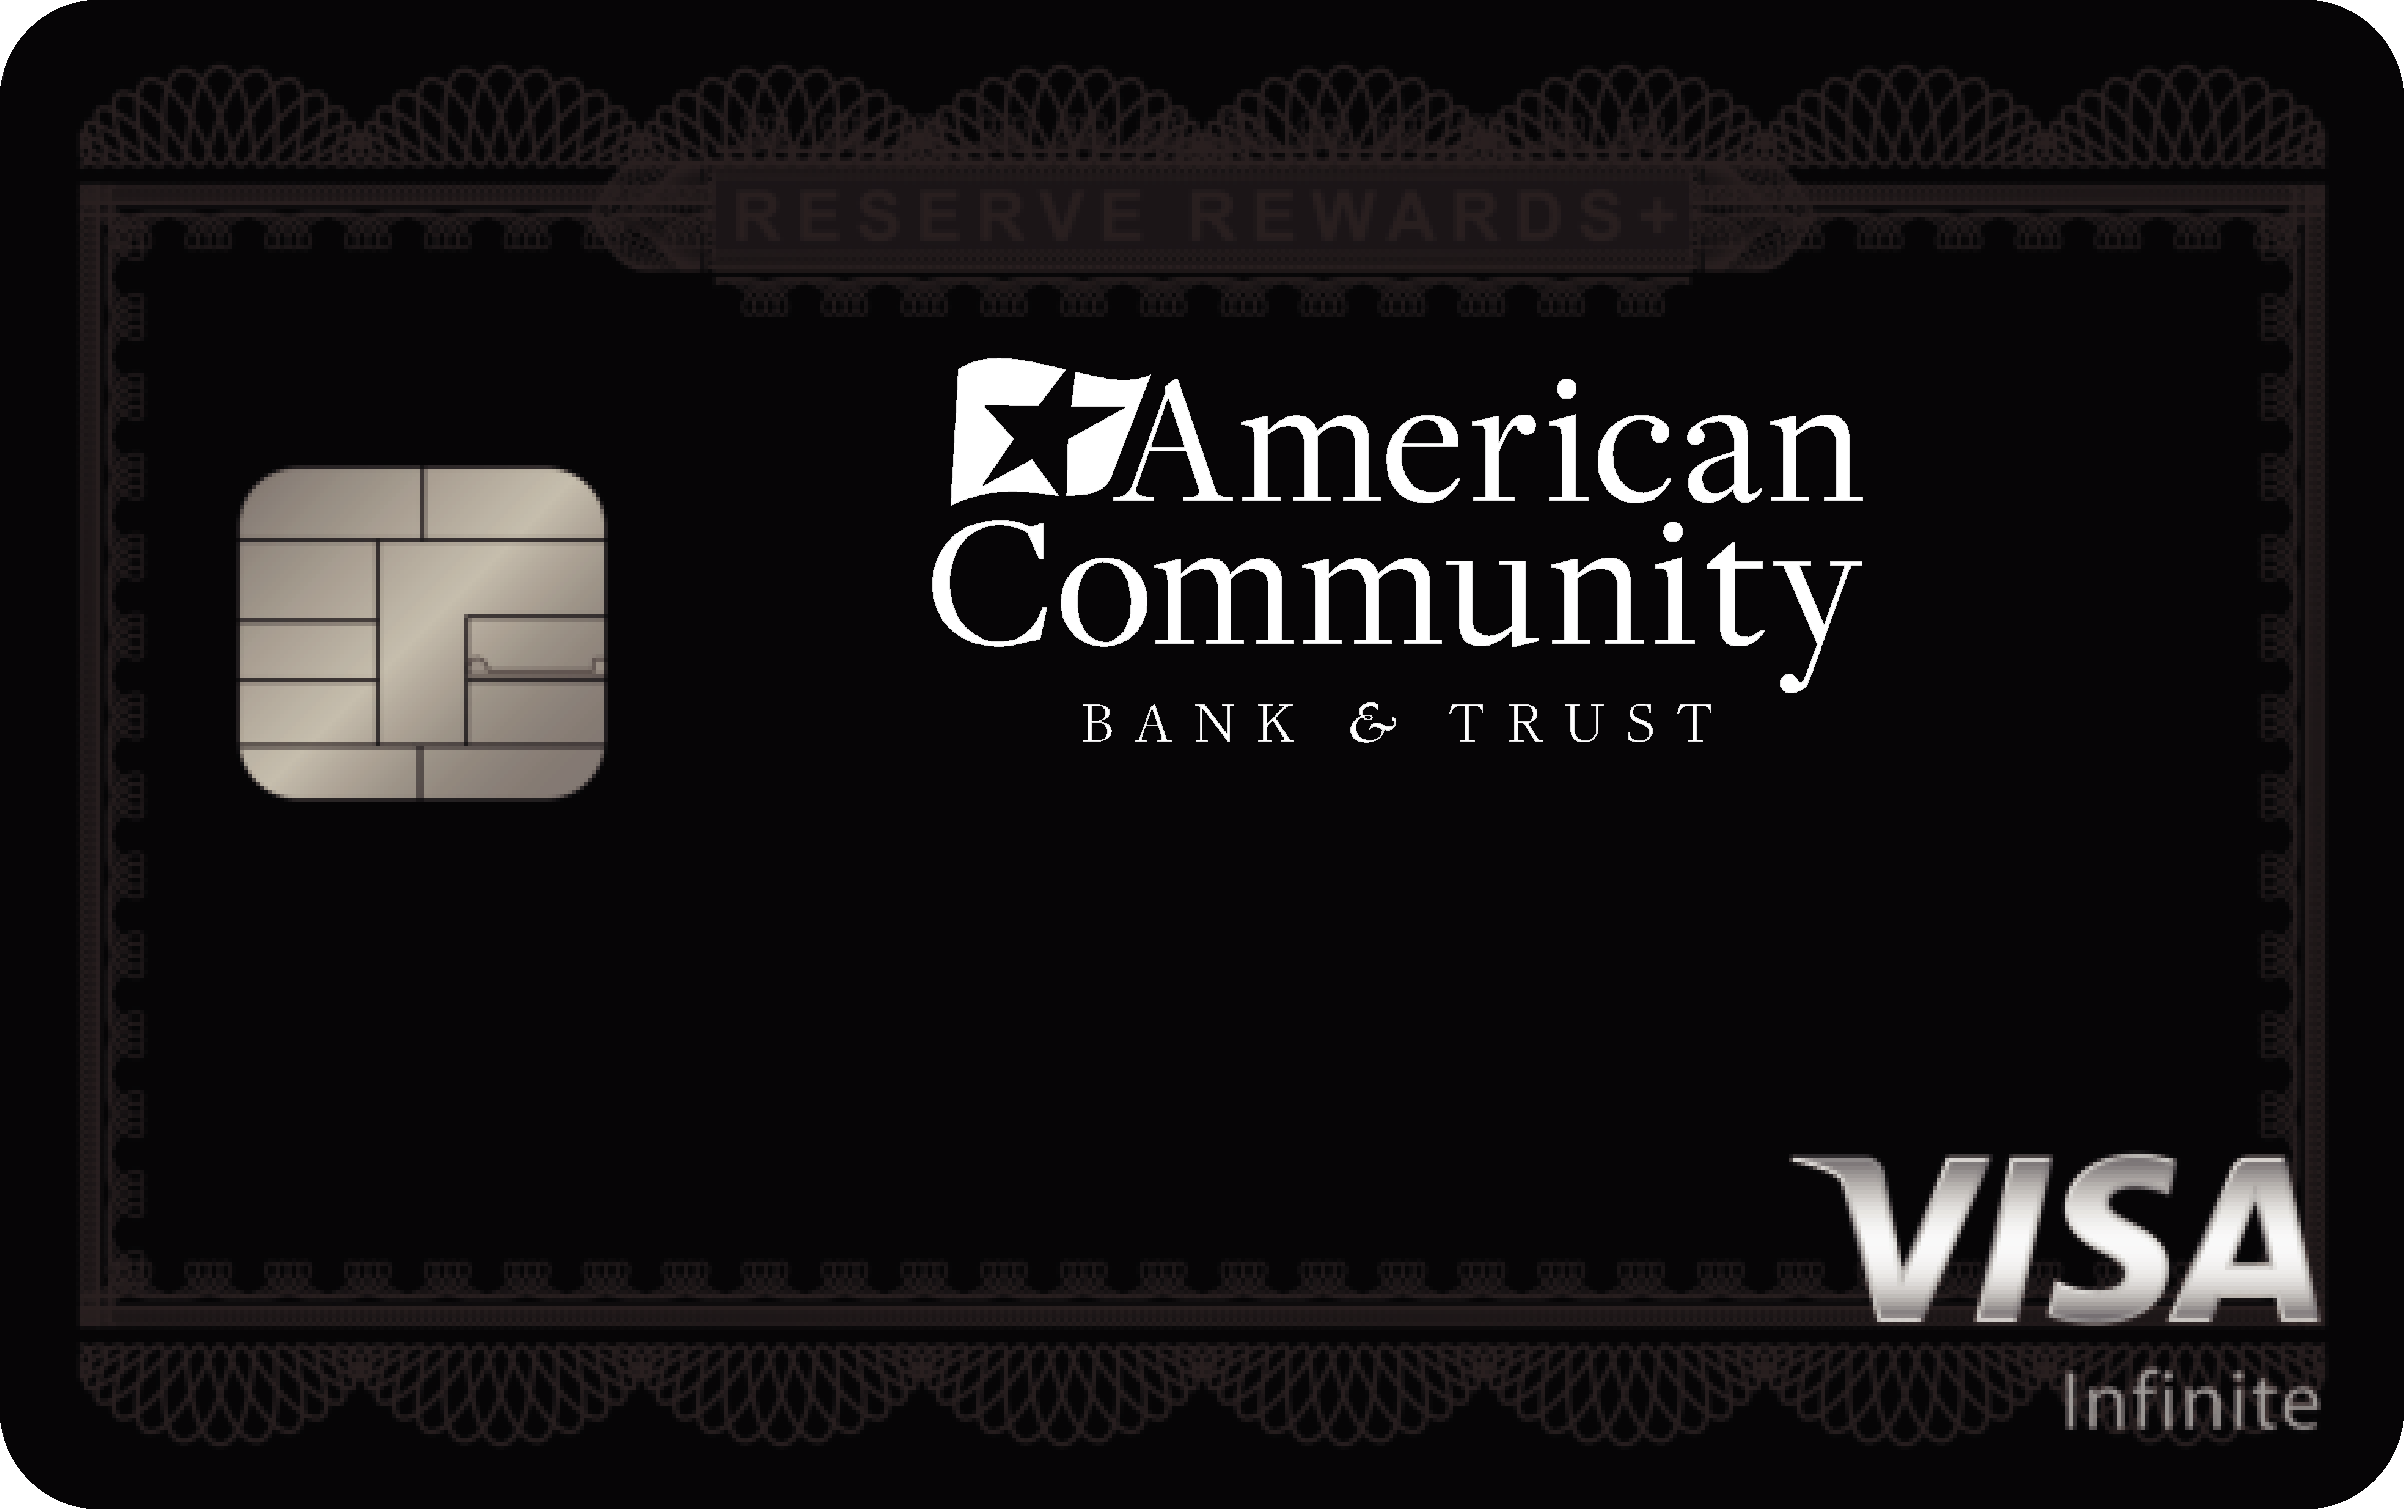 American Community Bank & Trust